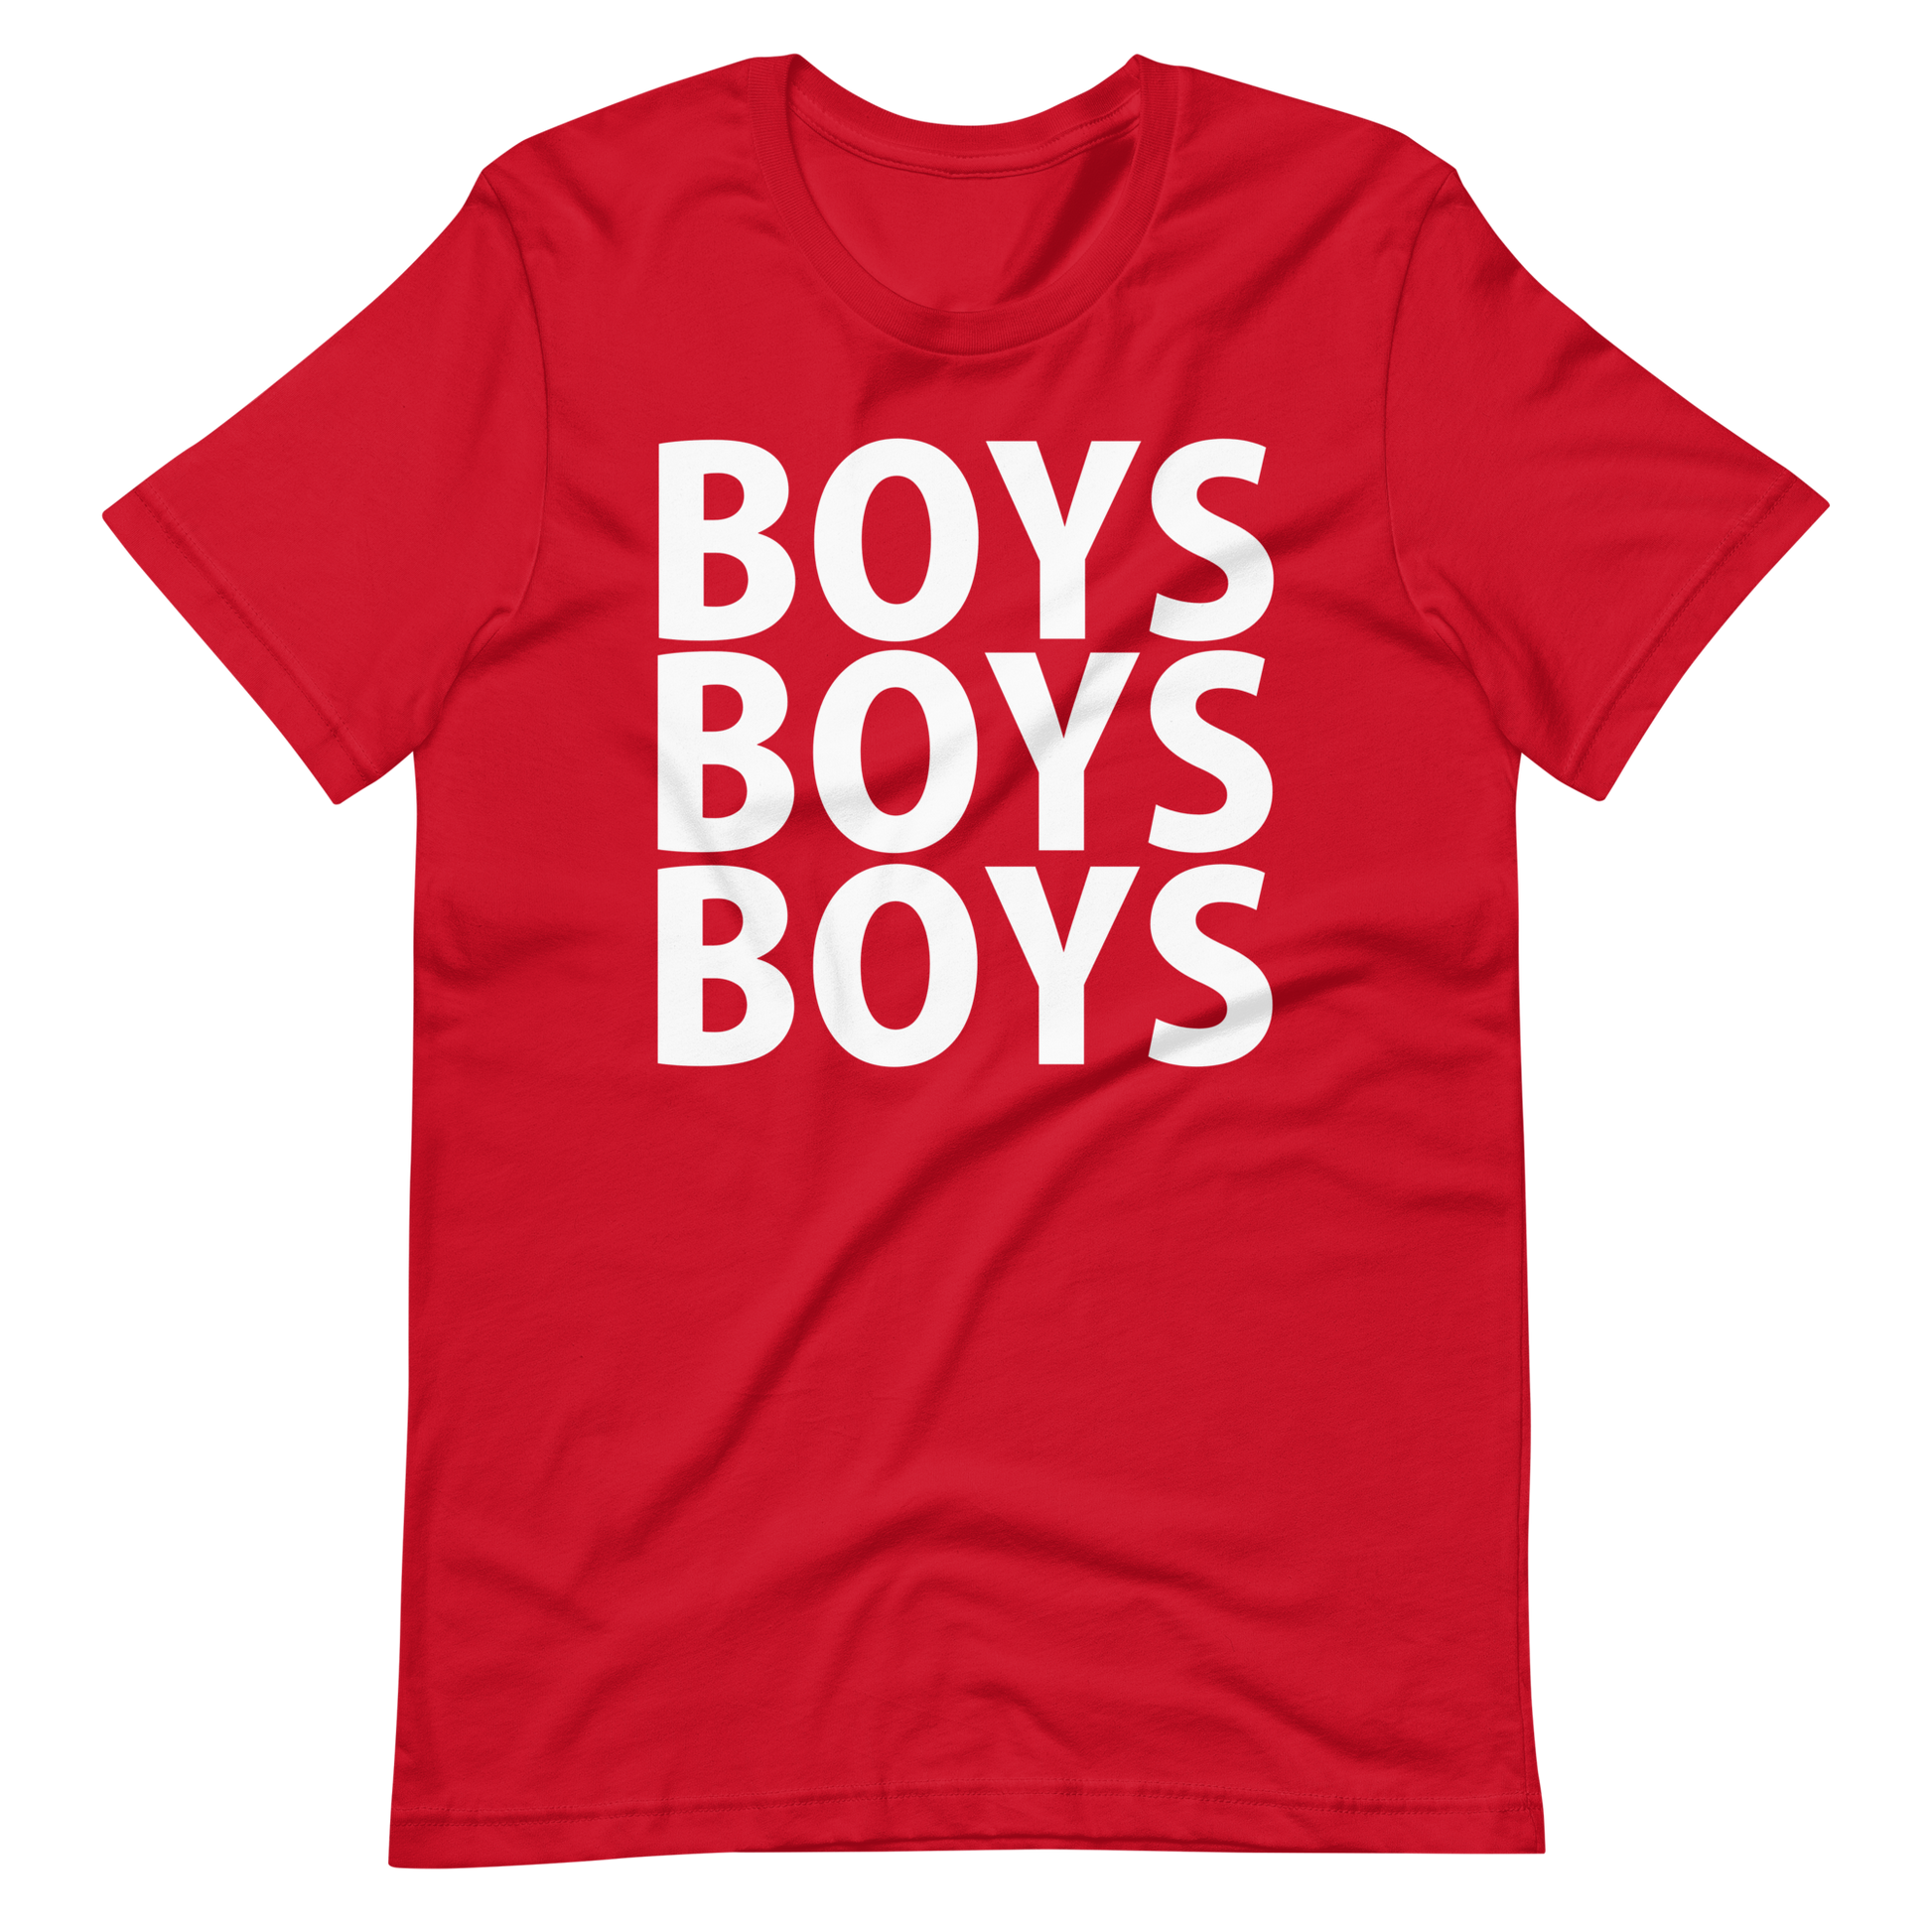 Boys Boys Boys T-Shirt - Red